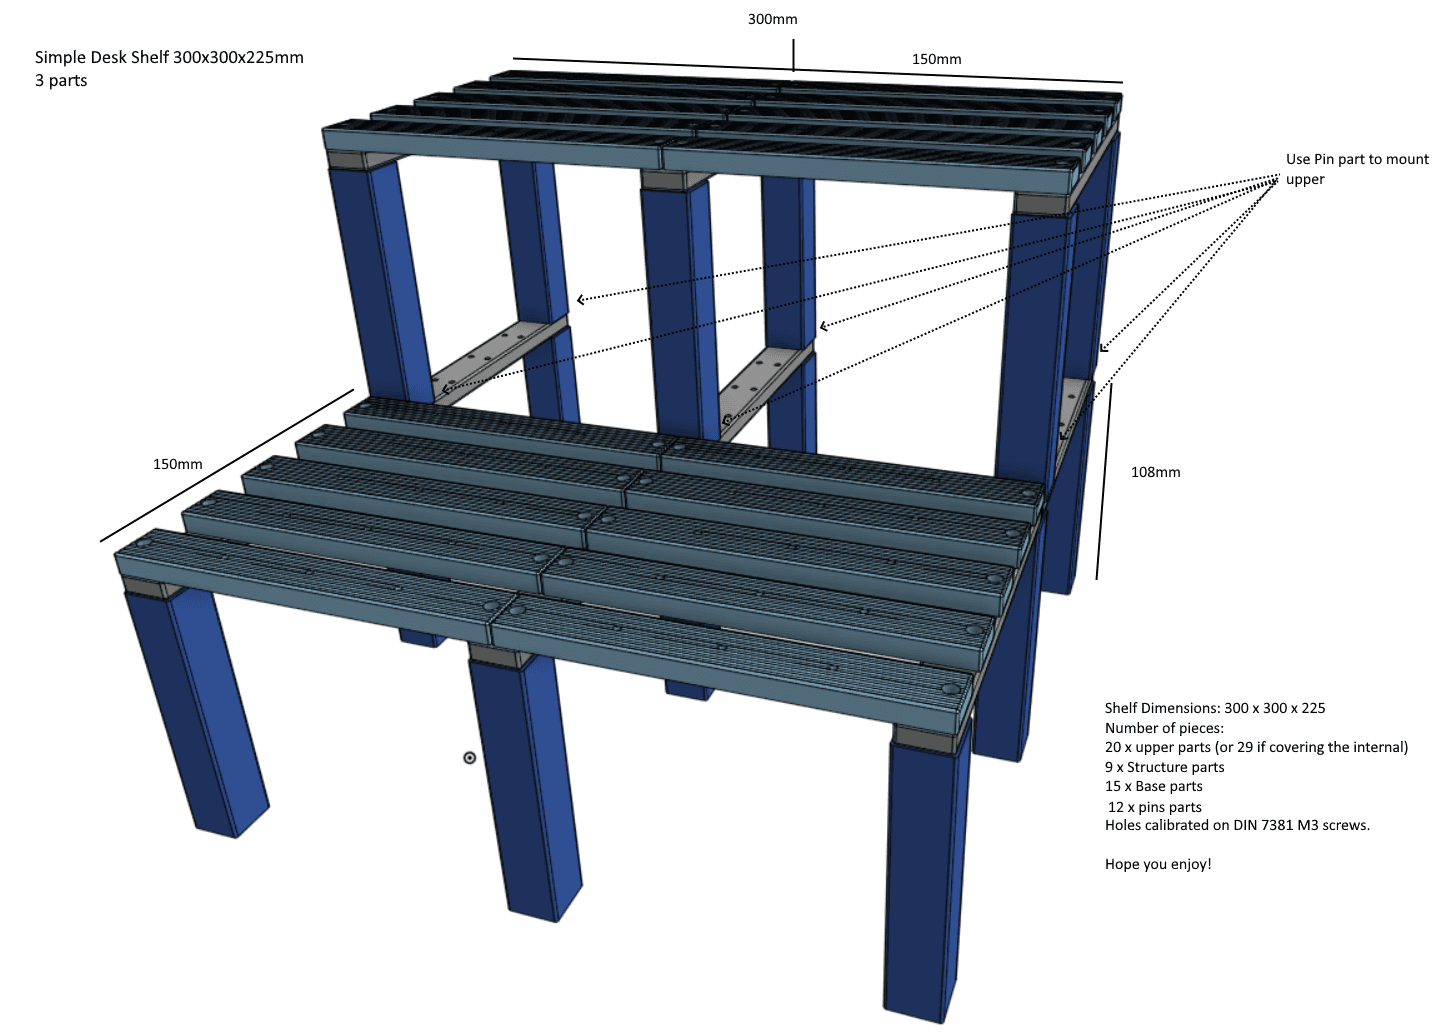 Simple modular Desktop Shelf to hold everything 3d model